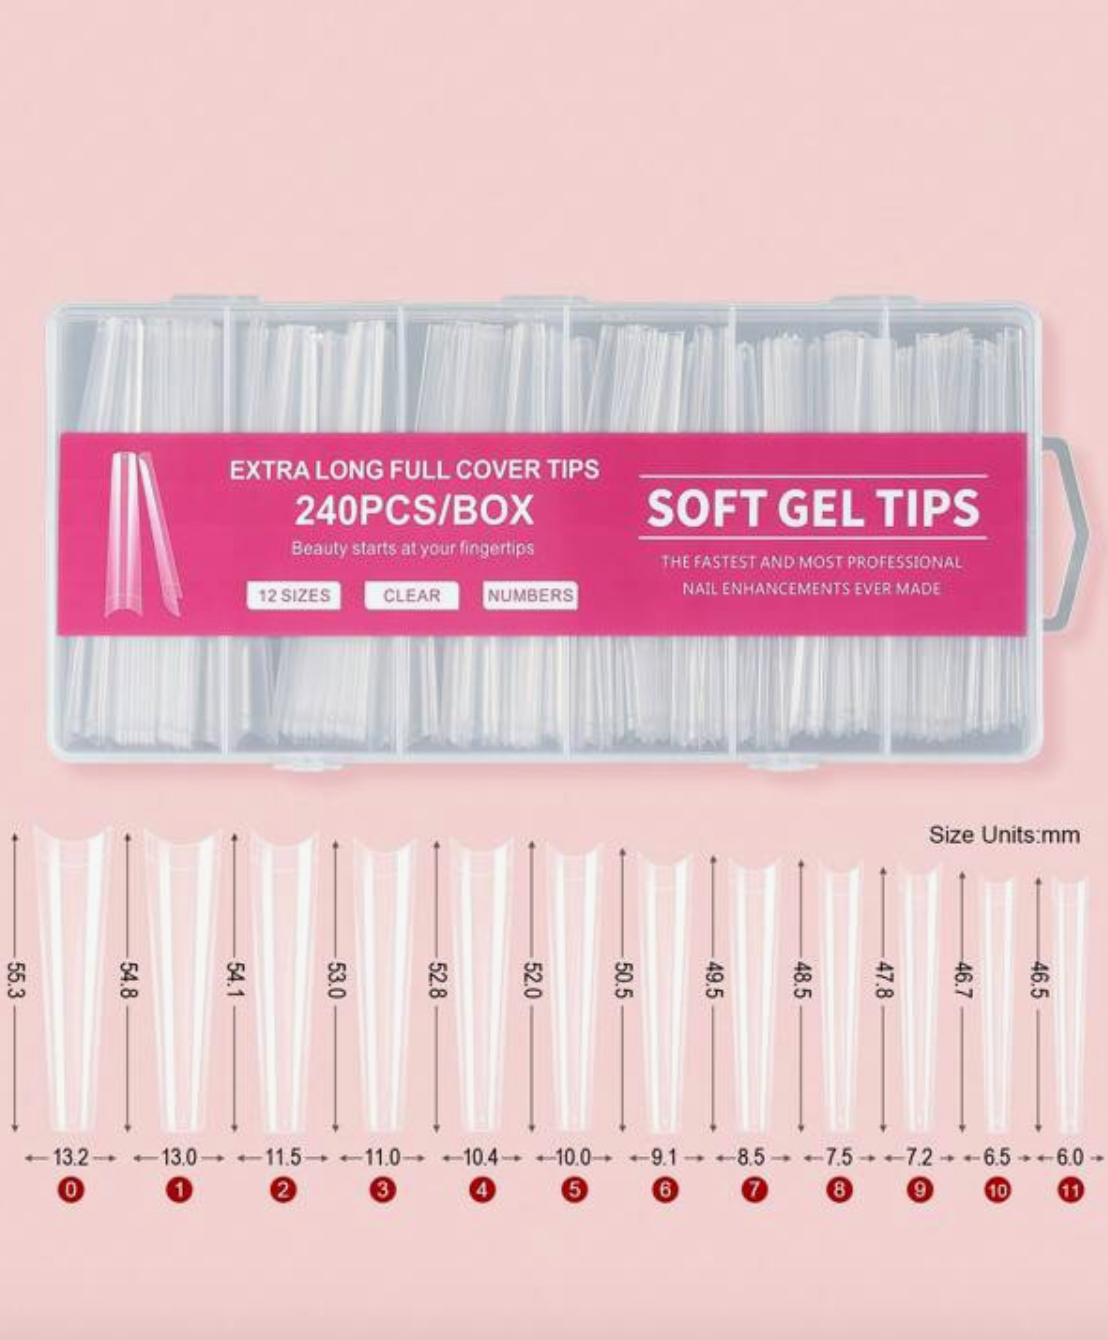 Soft Gel Tips | Full Cover | EXTRALONG (240pcs) Pink Box